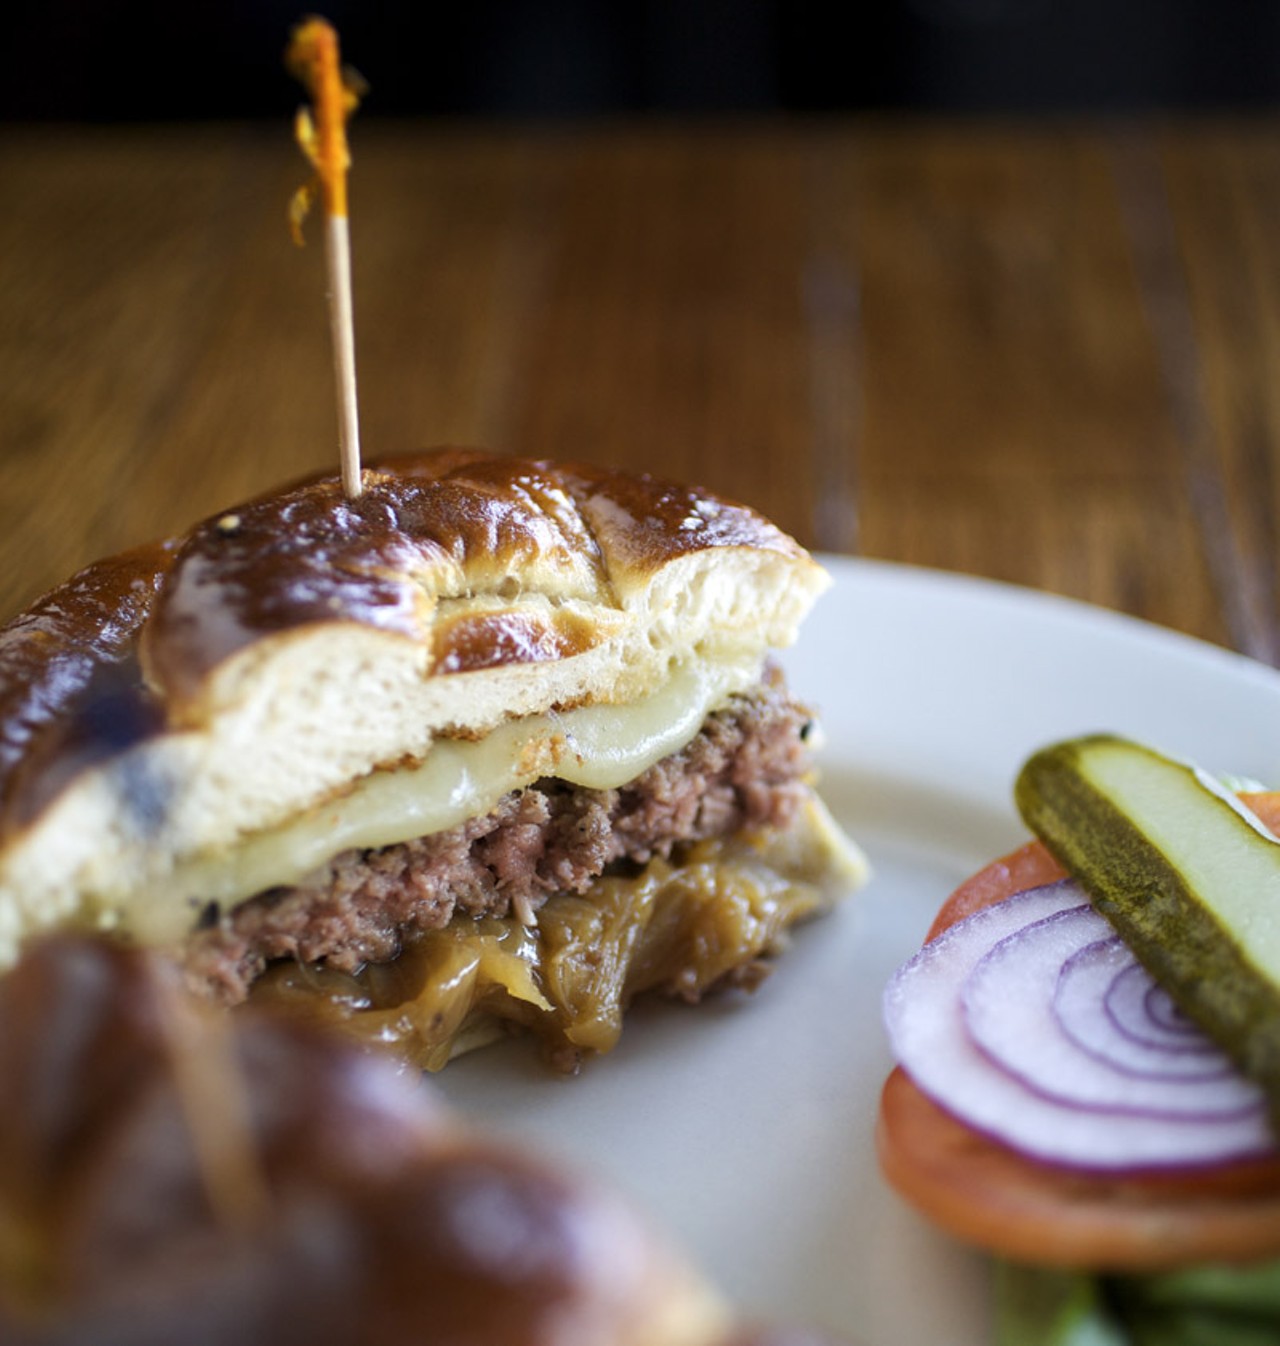 The Pretzel Melt - 1/3 pound hand-pattied burger with provolone & caramelized onions on a pretzel roll.